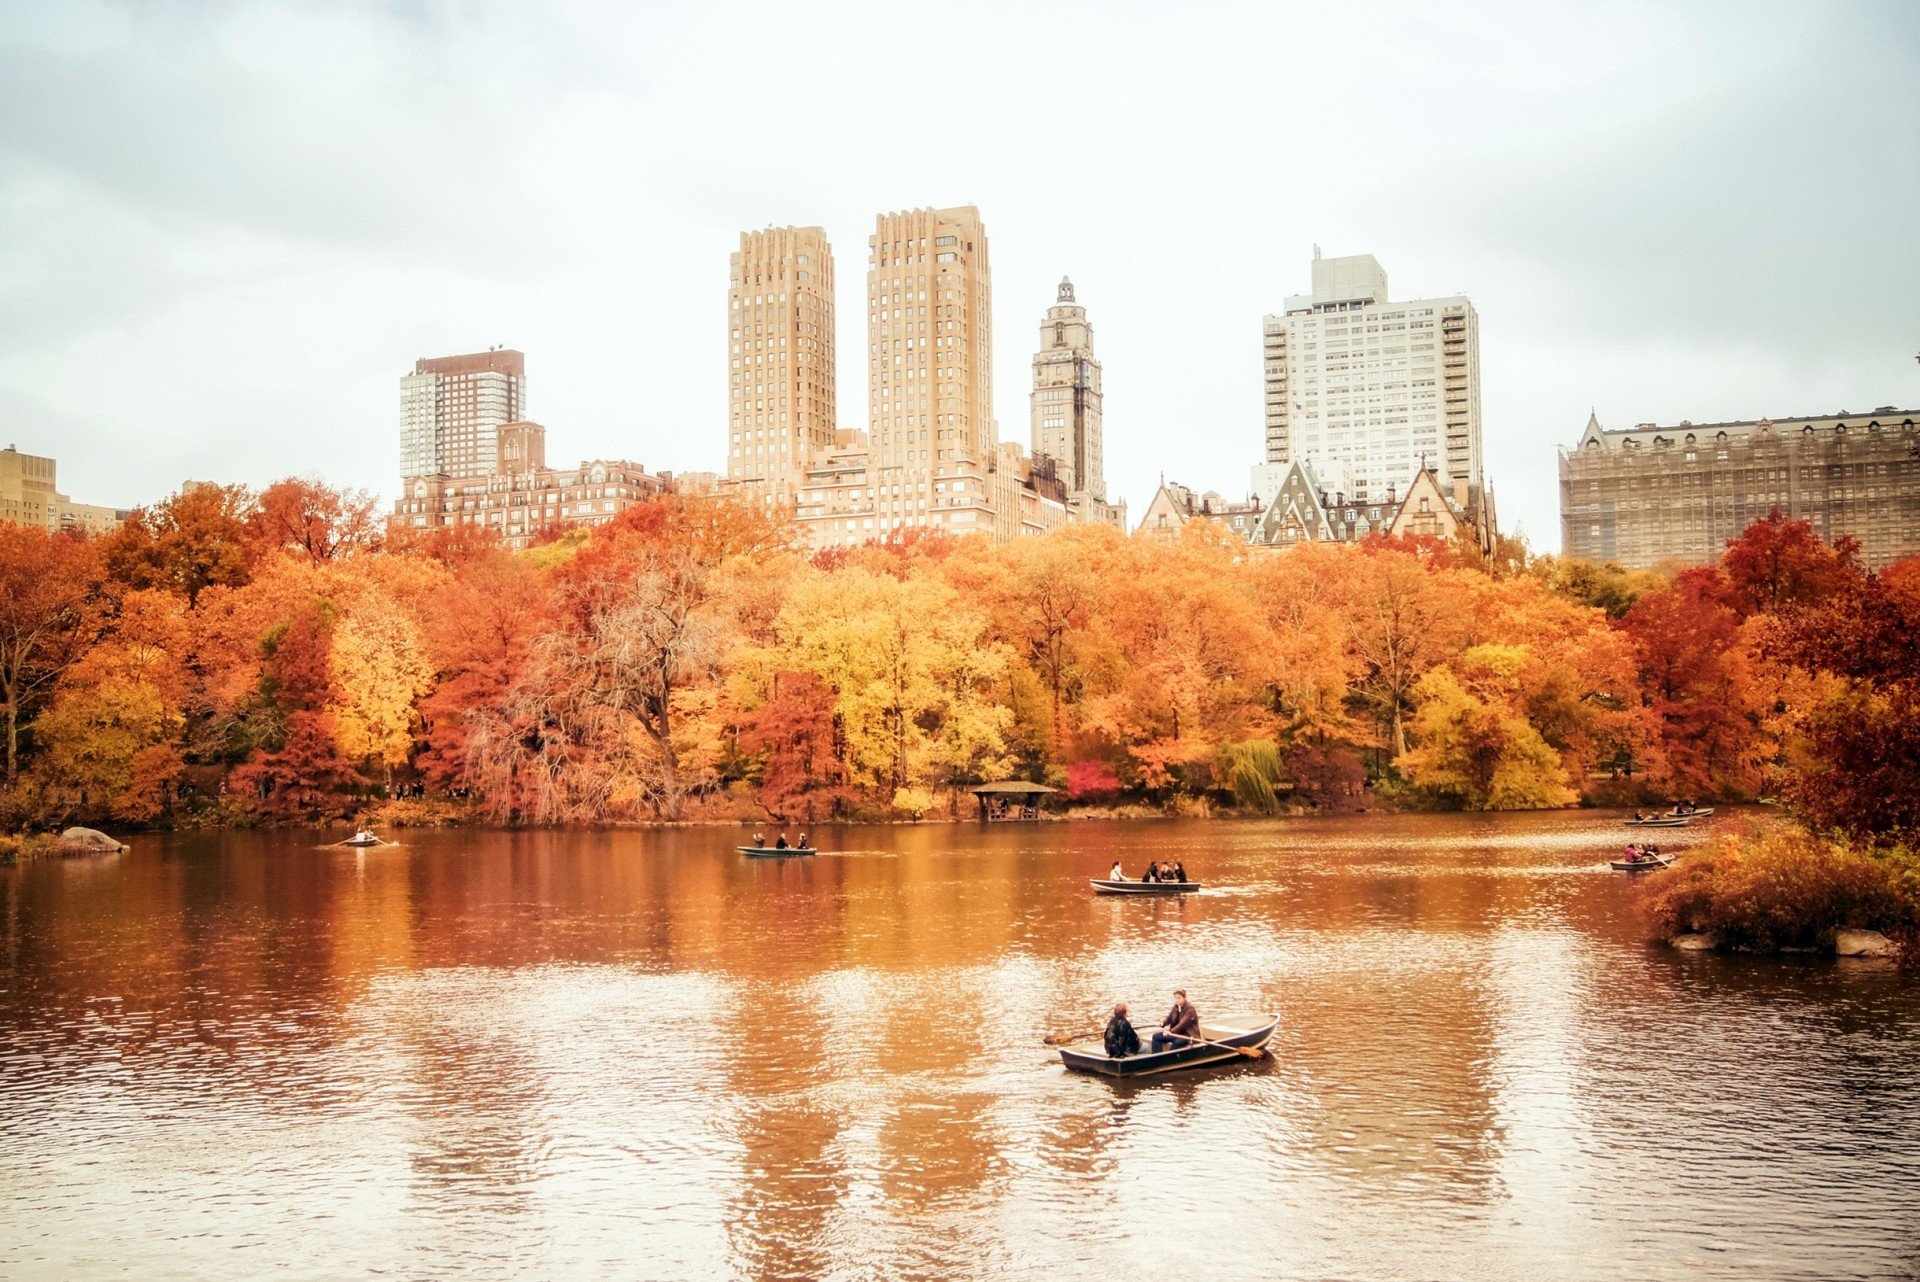 Картинки природы города. Централ парк Нью-Йорк. Осенний Нью-Йорк централ парк. Осень в Нью-Йорке Центральный парк. Центральный парк Нью-Йорк осенью.